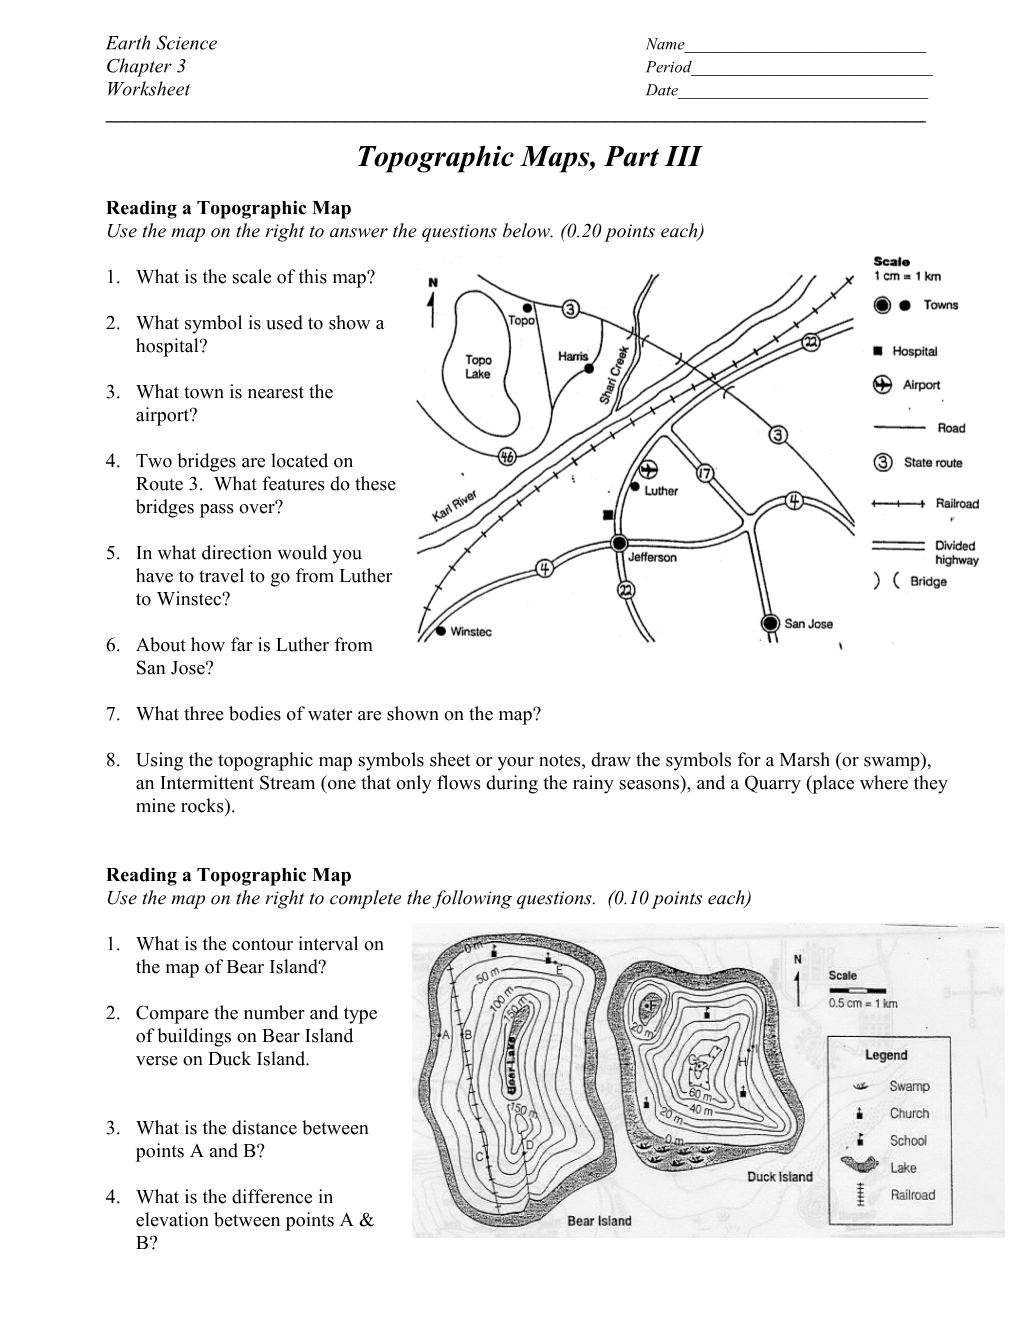 Topographic Maps, Part III